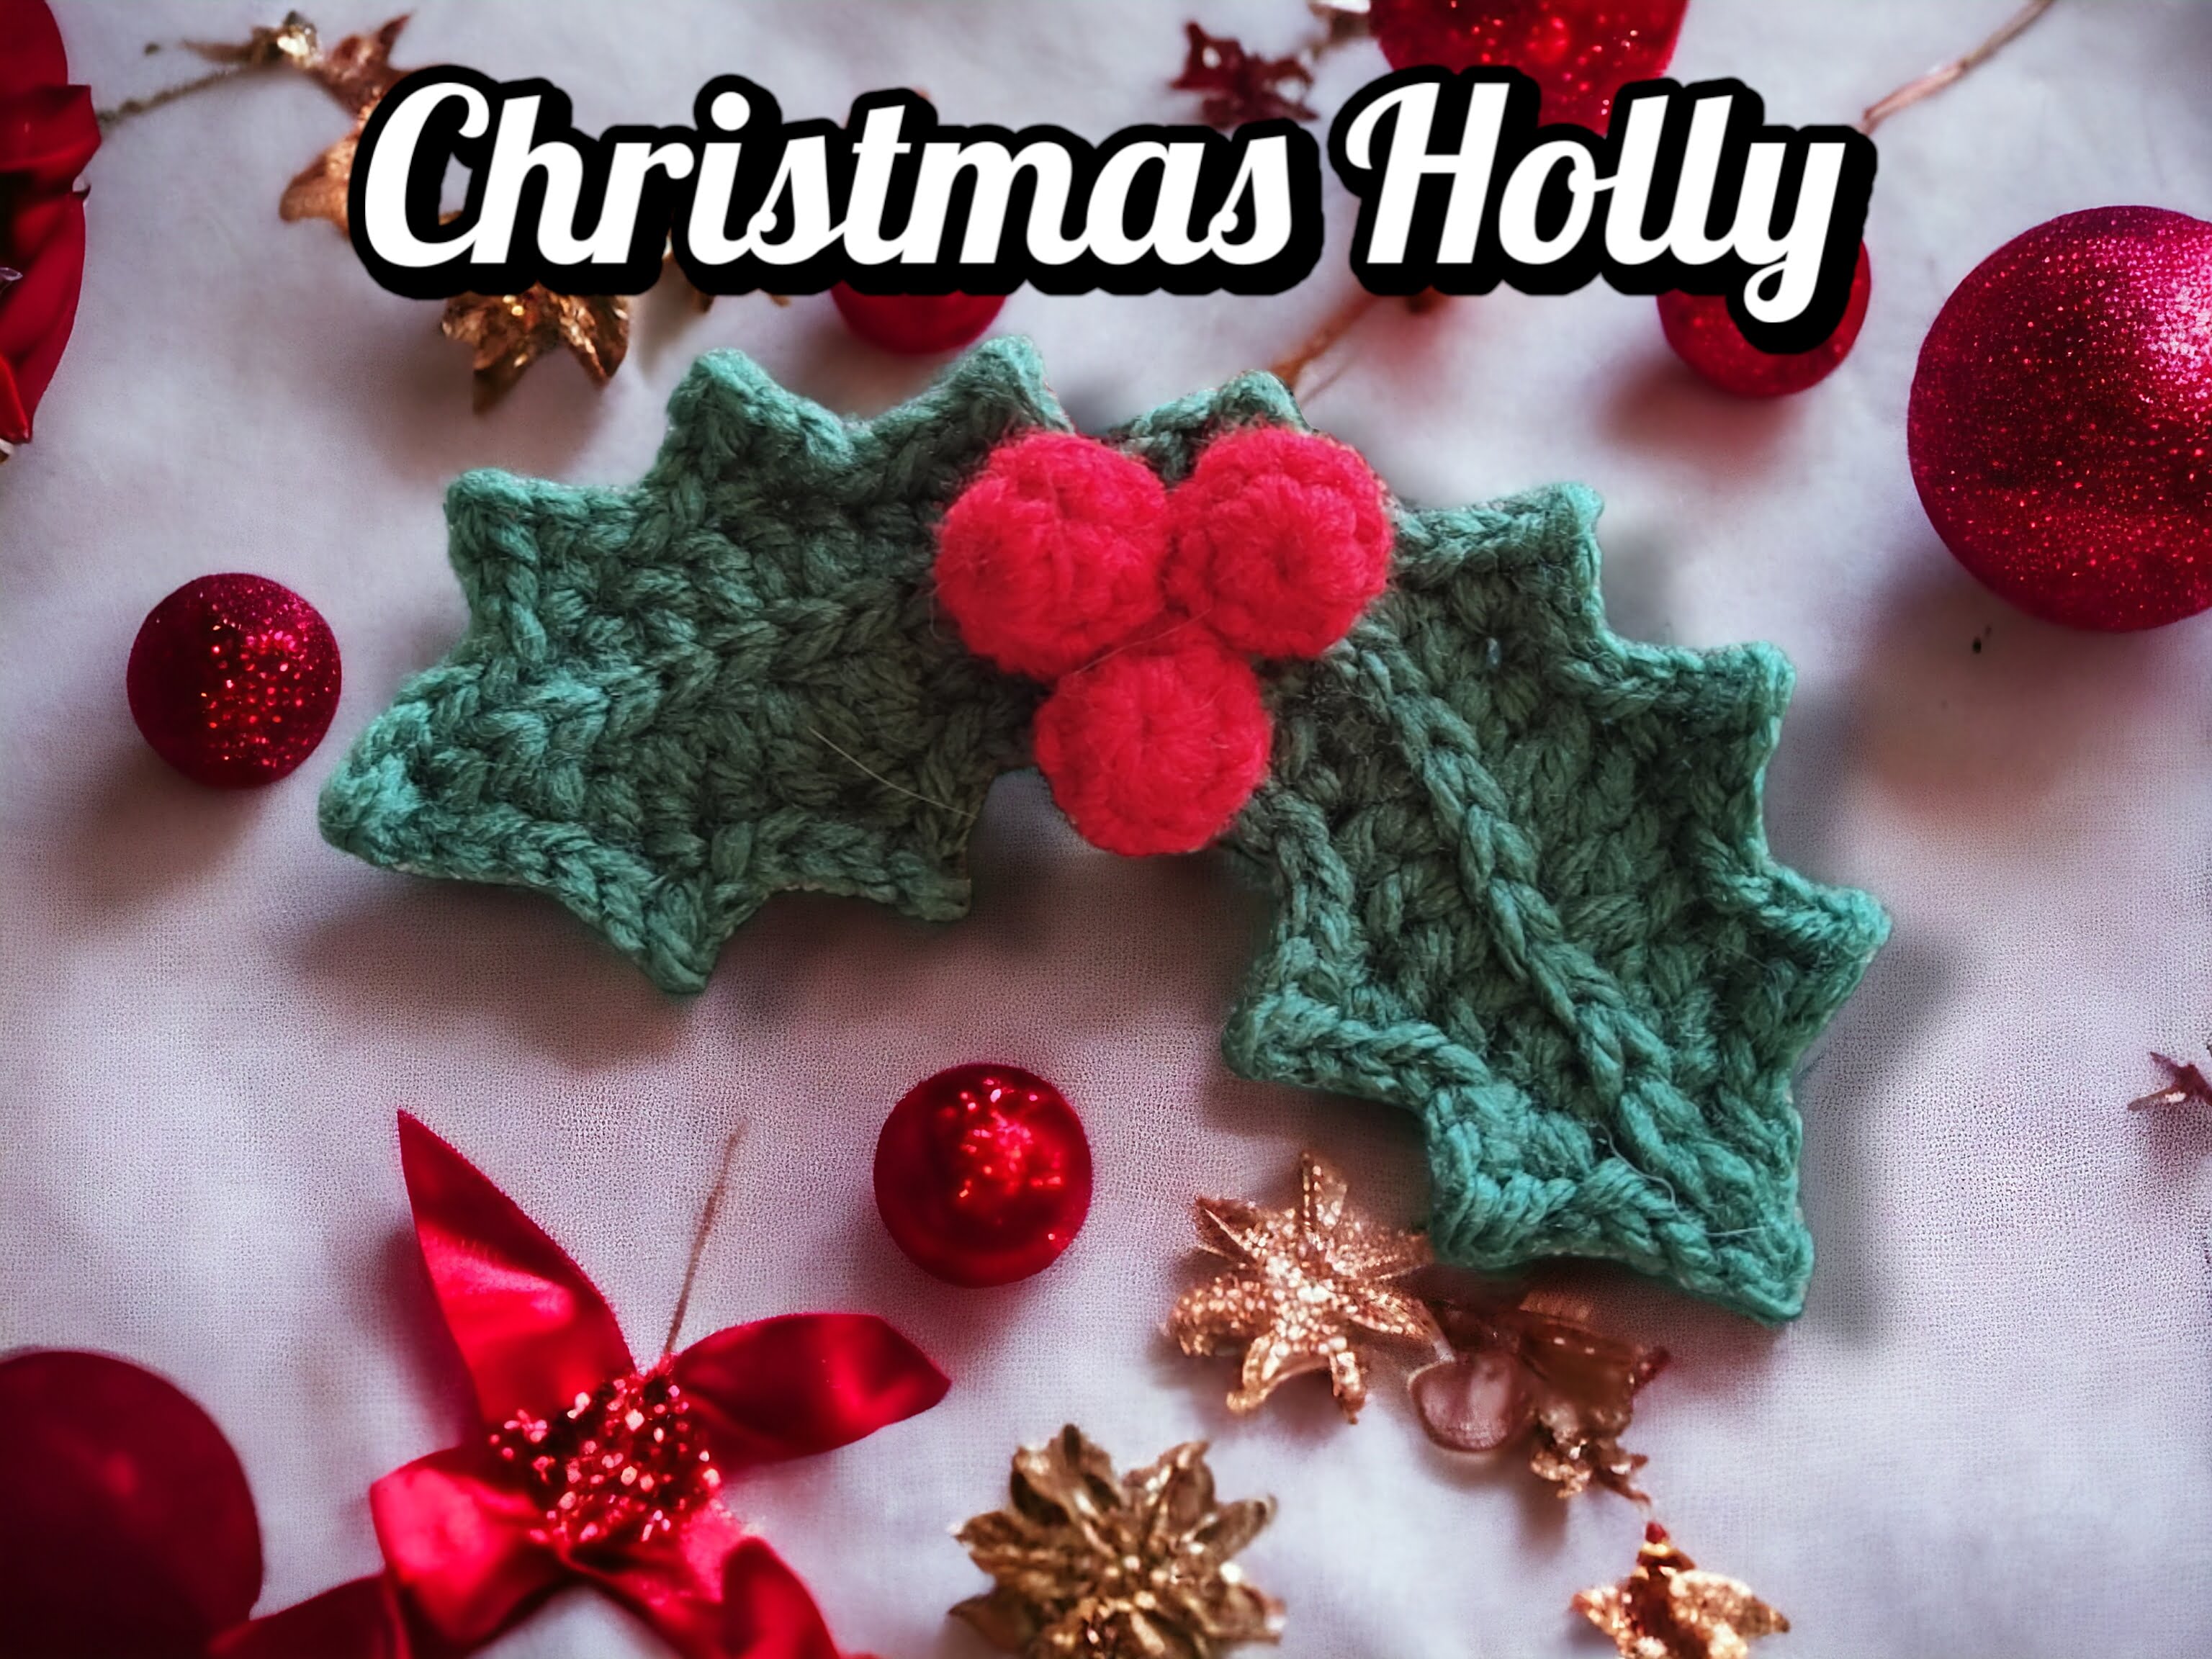 How to Make Christmas Holly